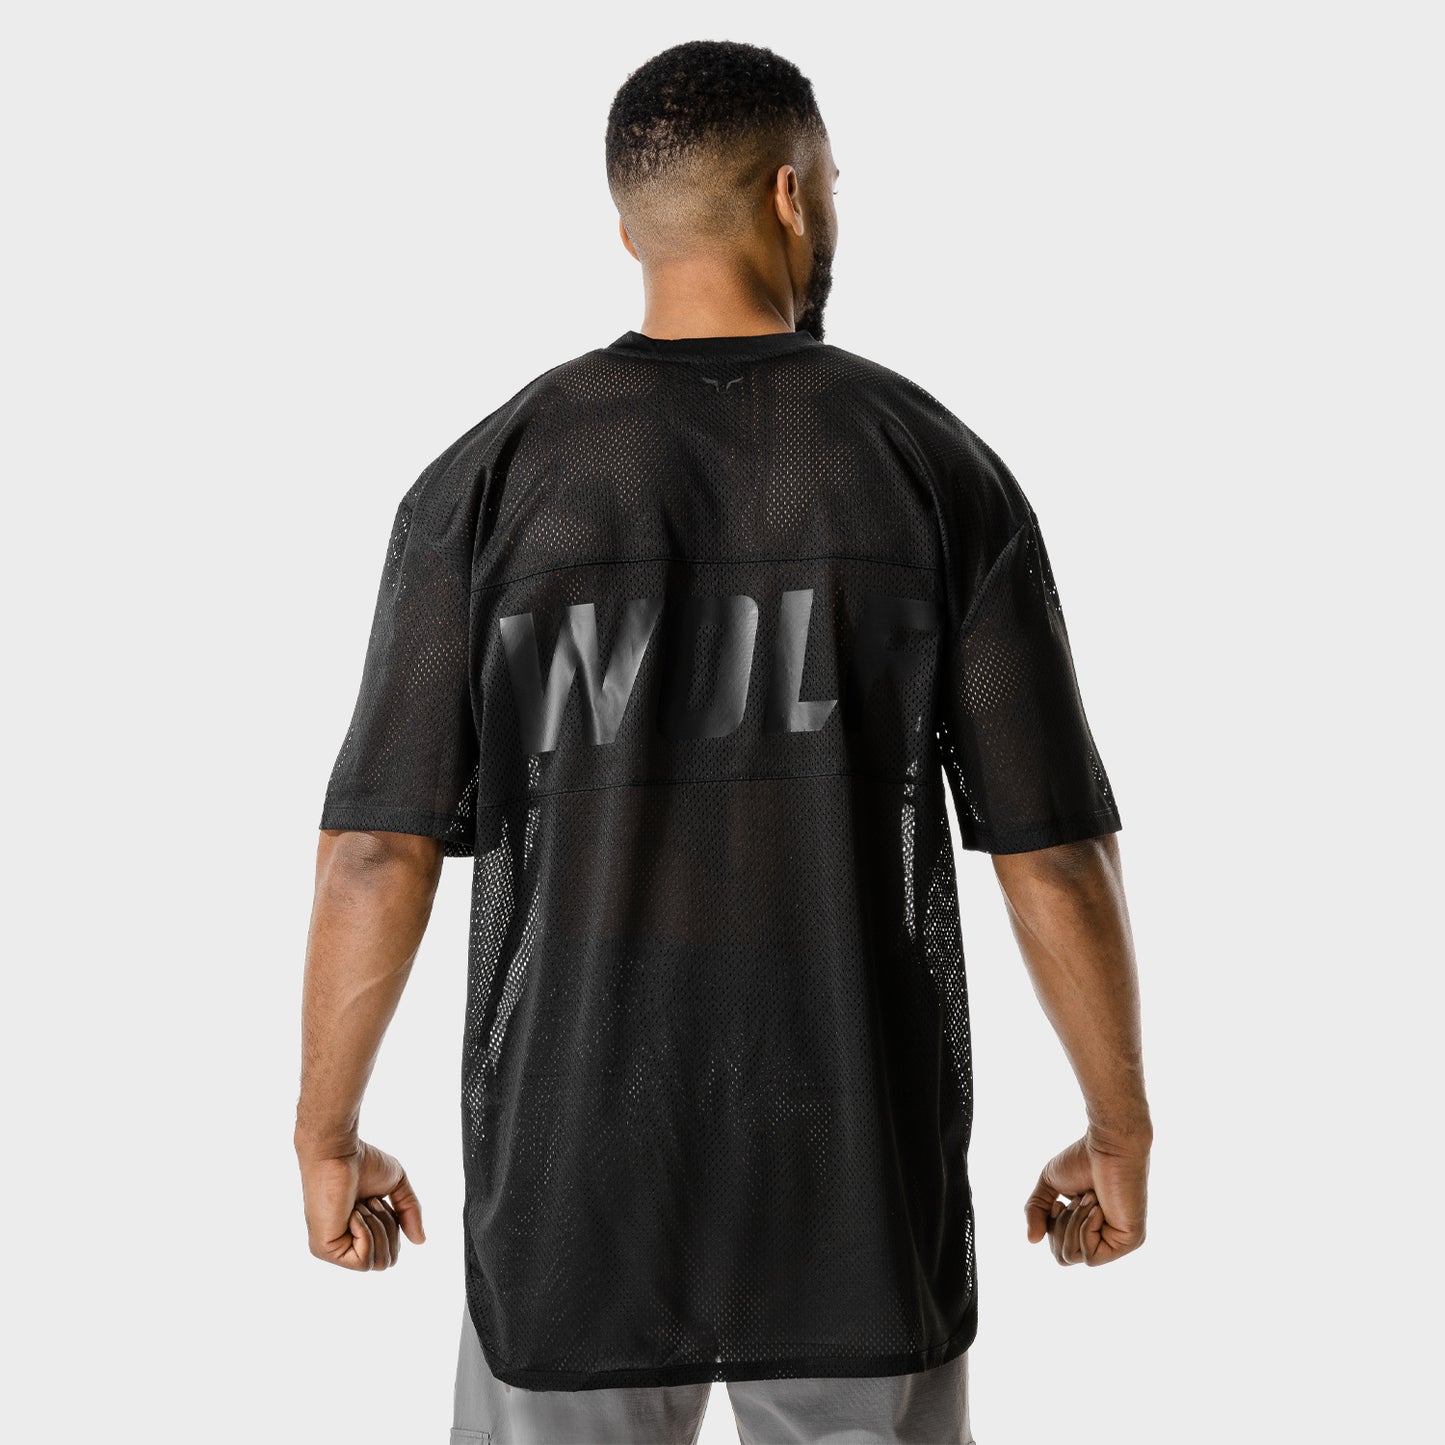 squatwolf-workout-t-shirt-code-oversized-mesh-t-shirt-black-gym-clothes-for-men